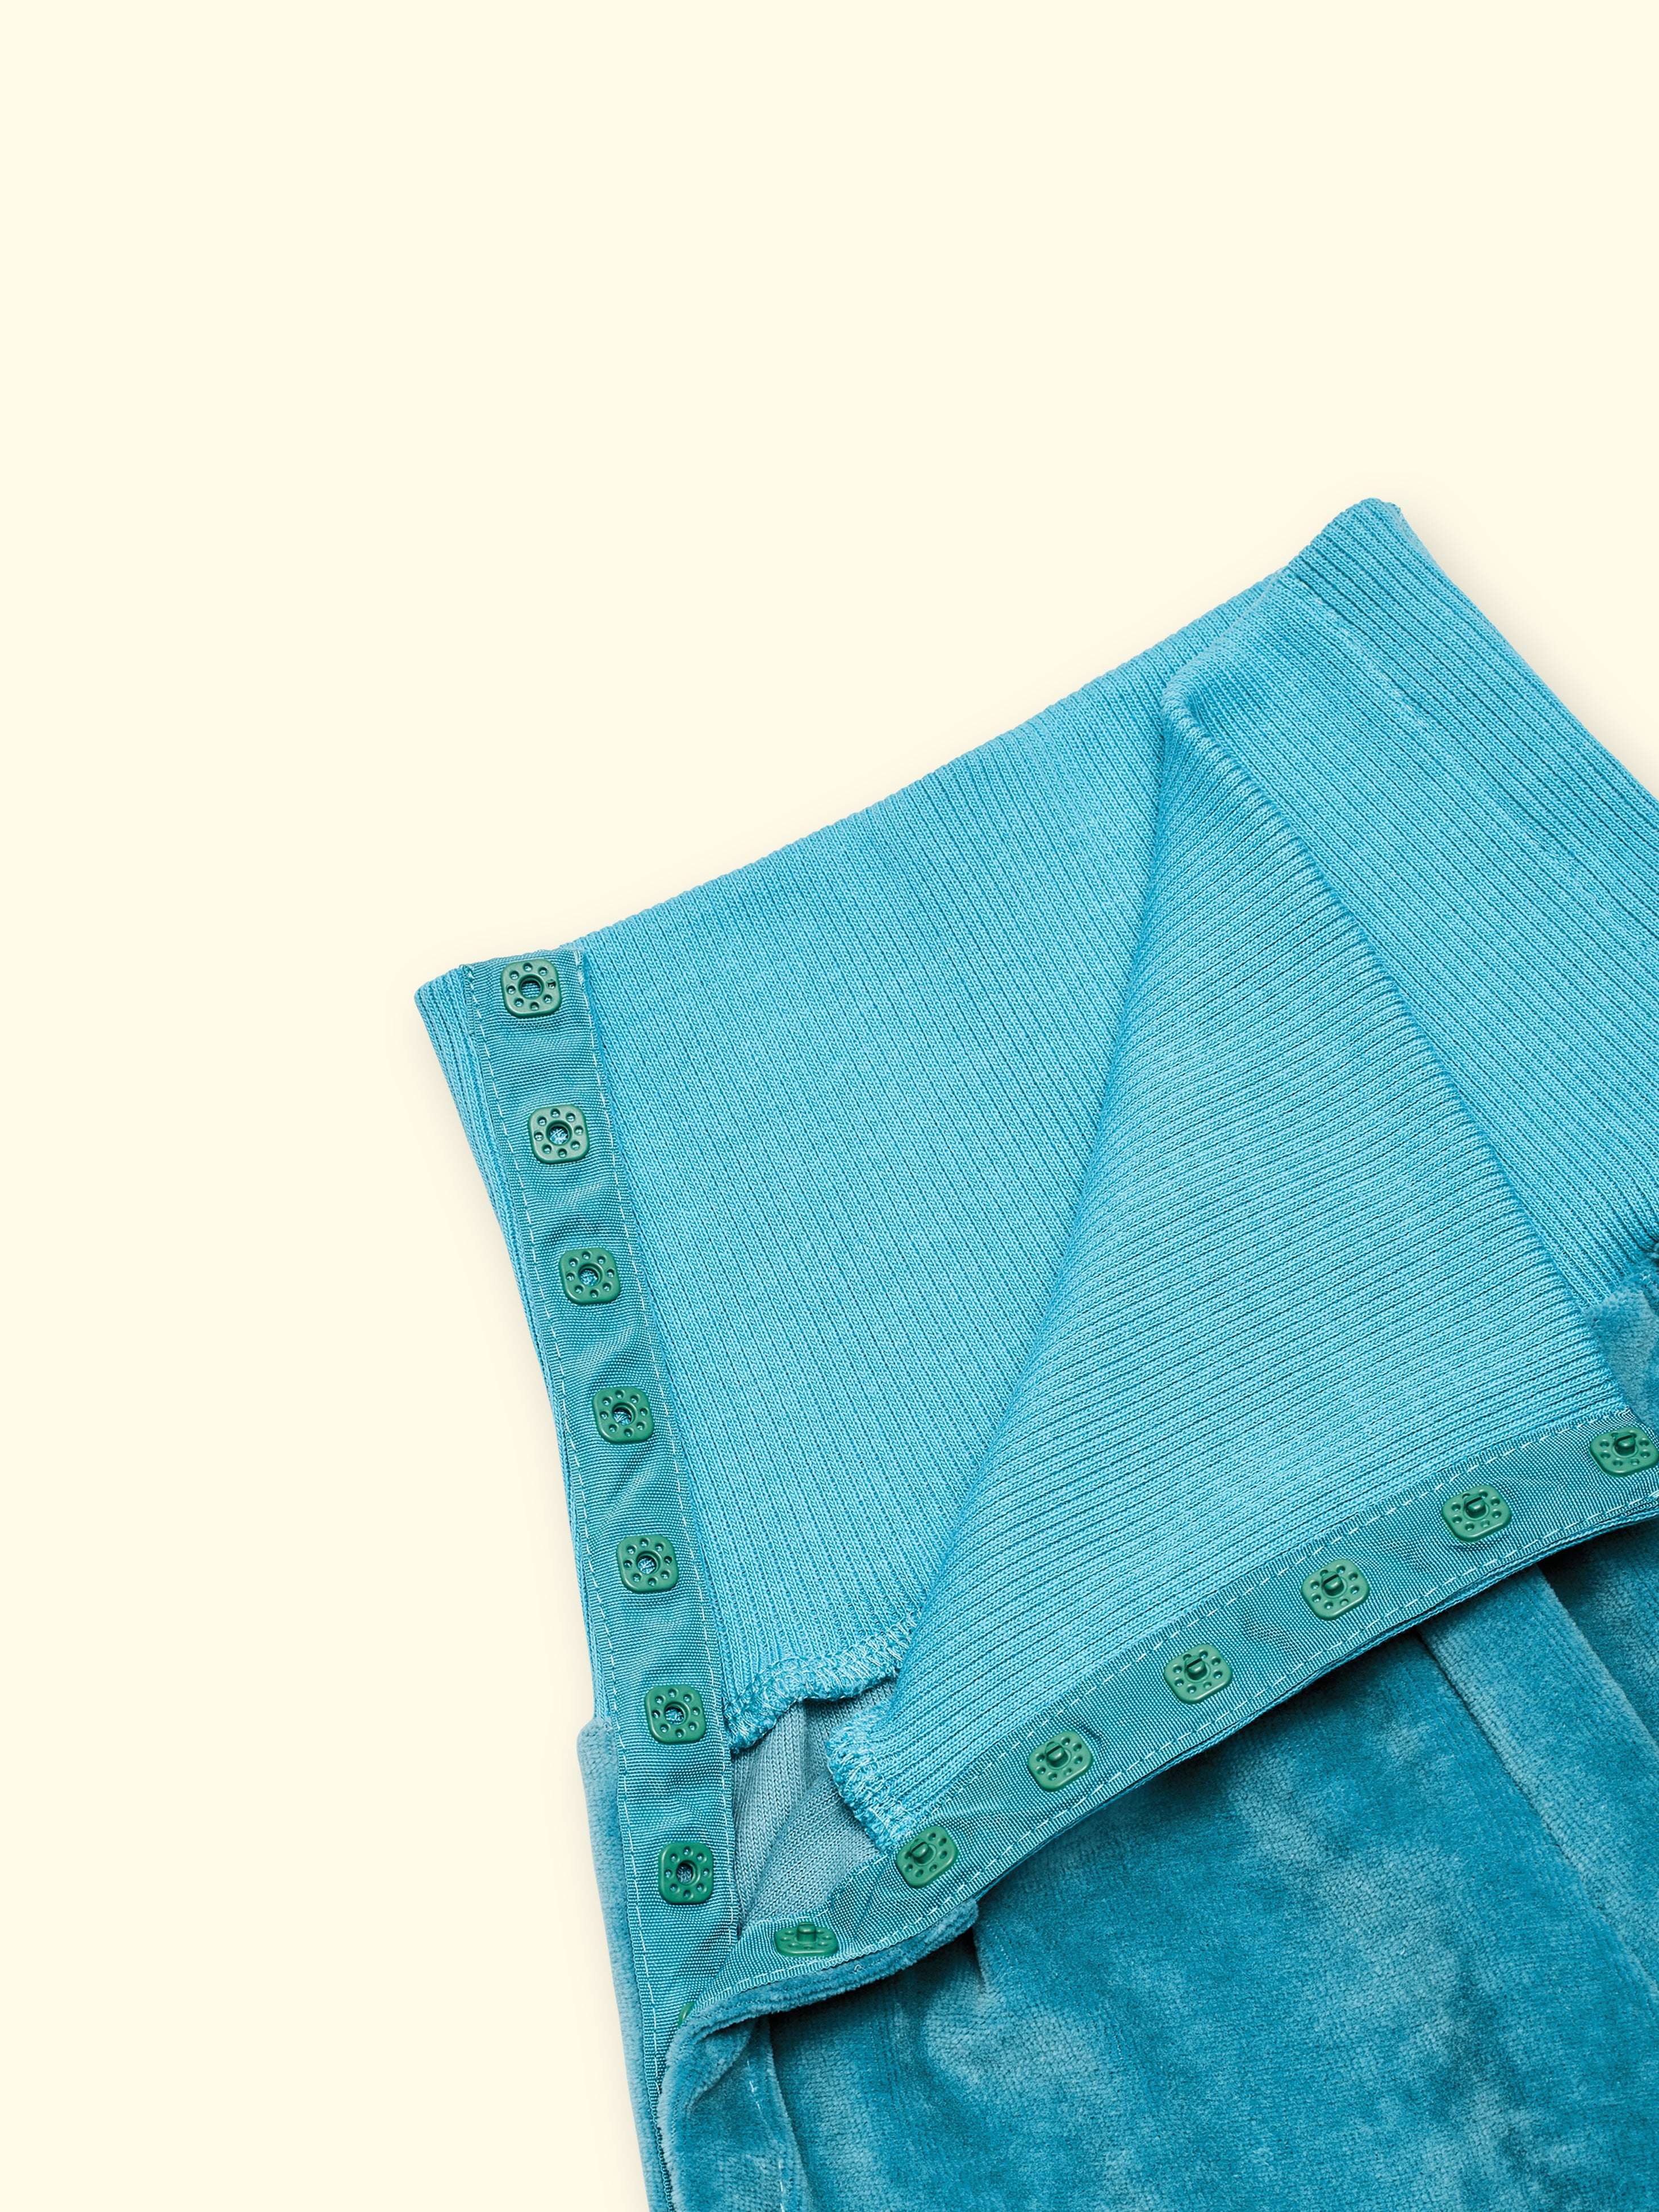 Pantalón Nicki para estoma, prótesis u ortesis, niños con silla de ruedas - verde azulado